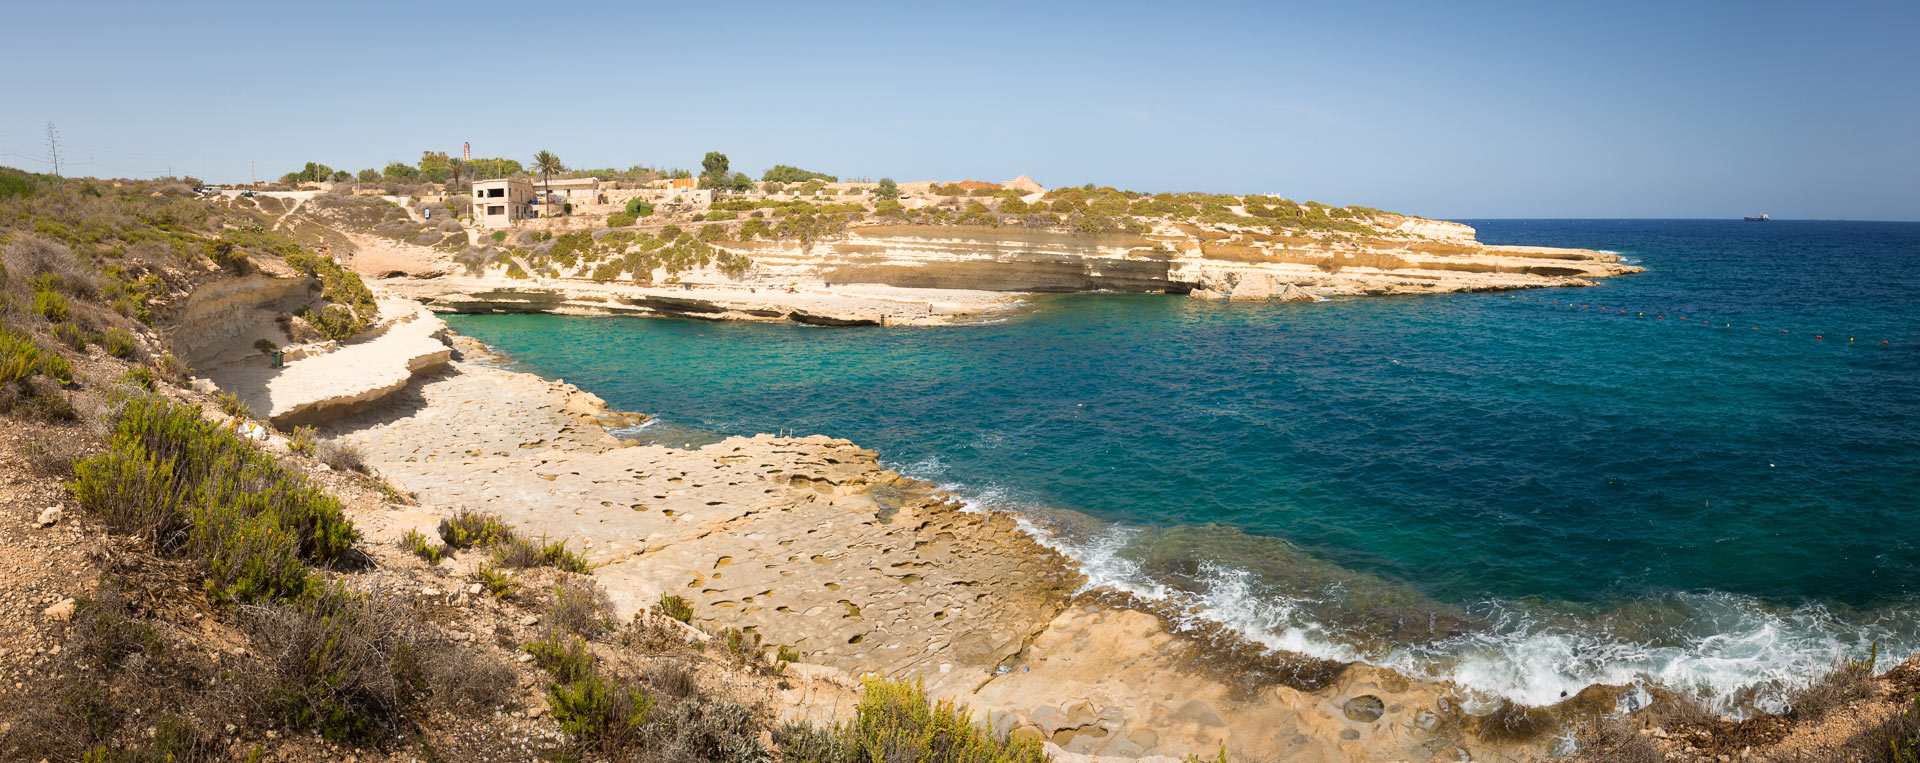 Delimara Bay - best Malta beaches